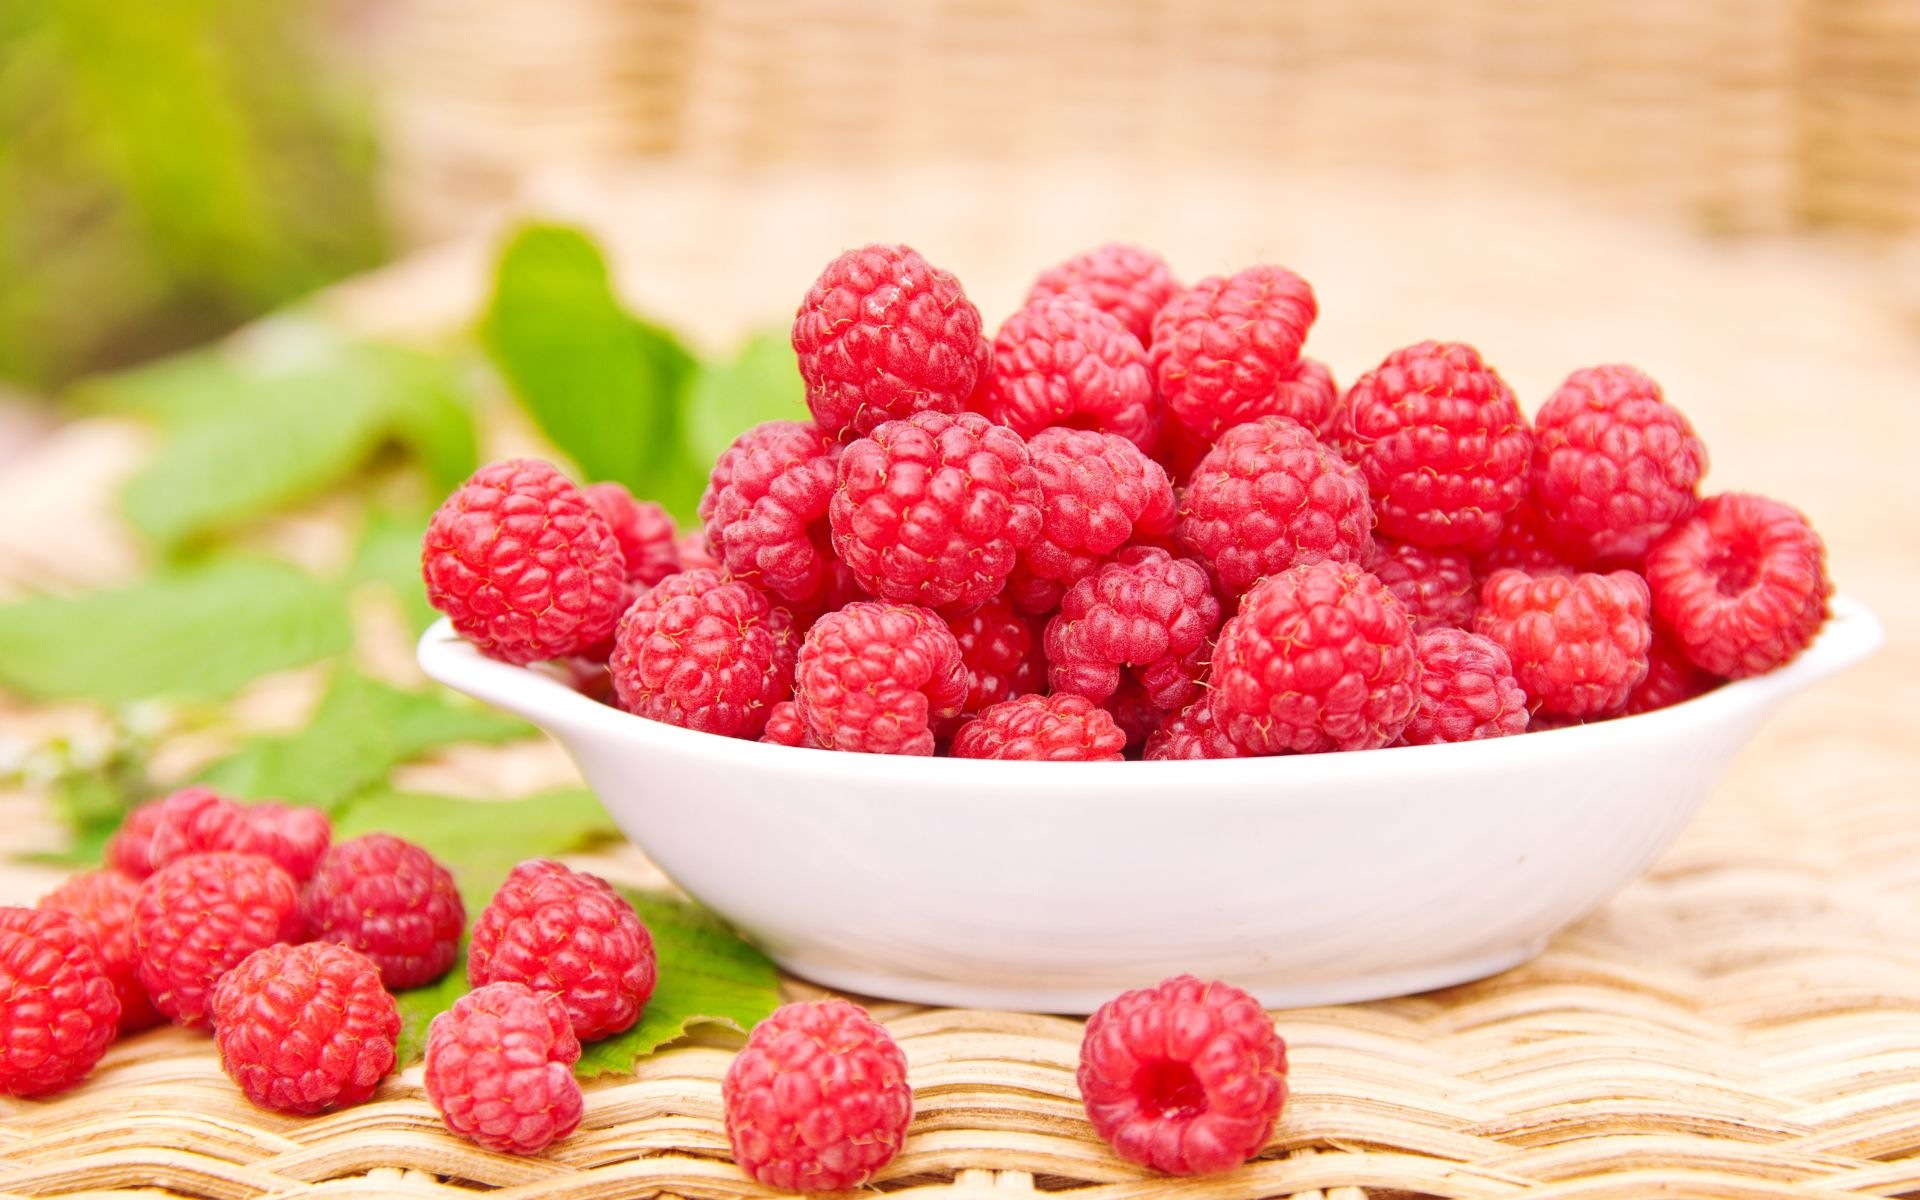 Reasons We Should All Be Eating More Raspberries